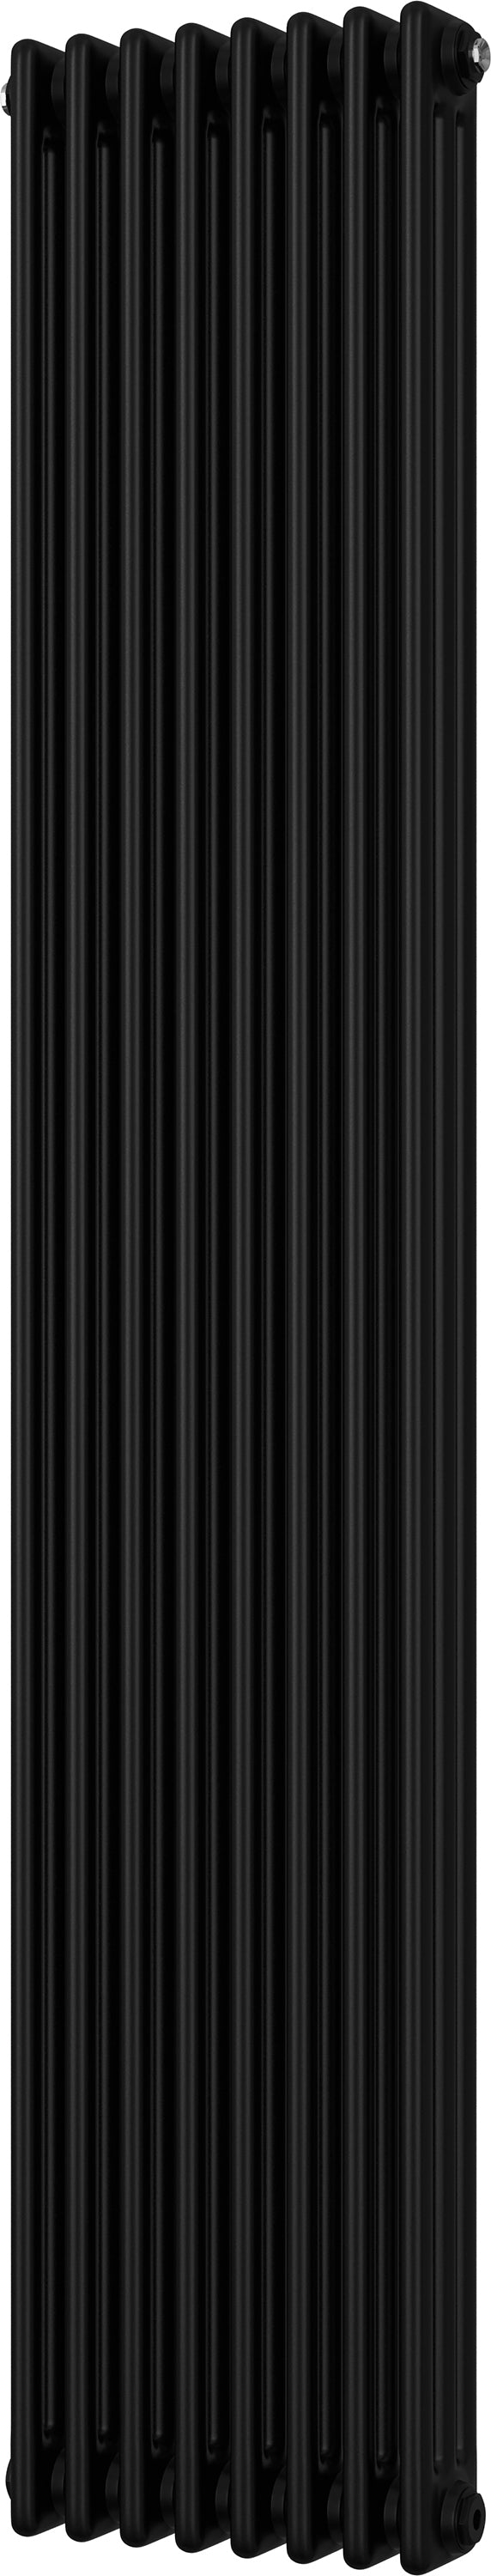 Alpha - Black Vertical Column Radiator H1800mm x W376mm 3 Column